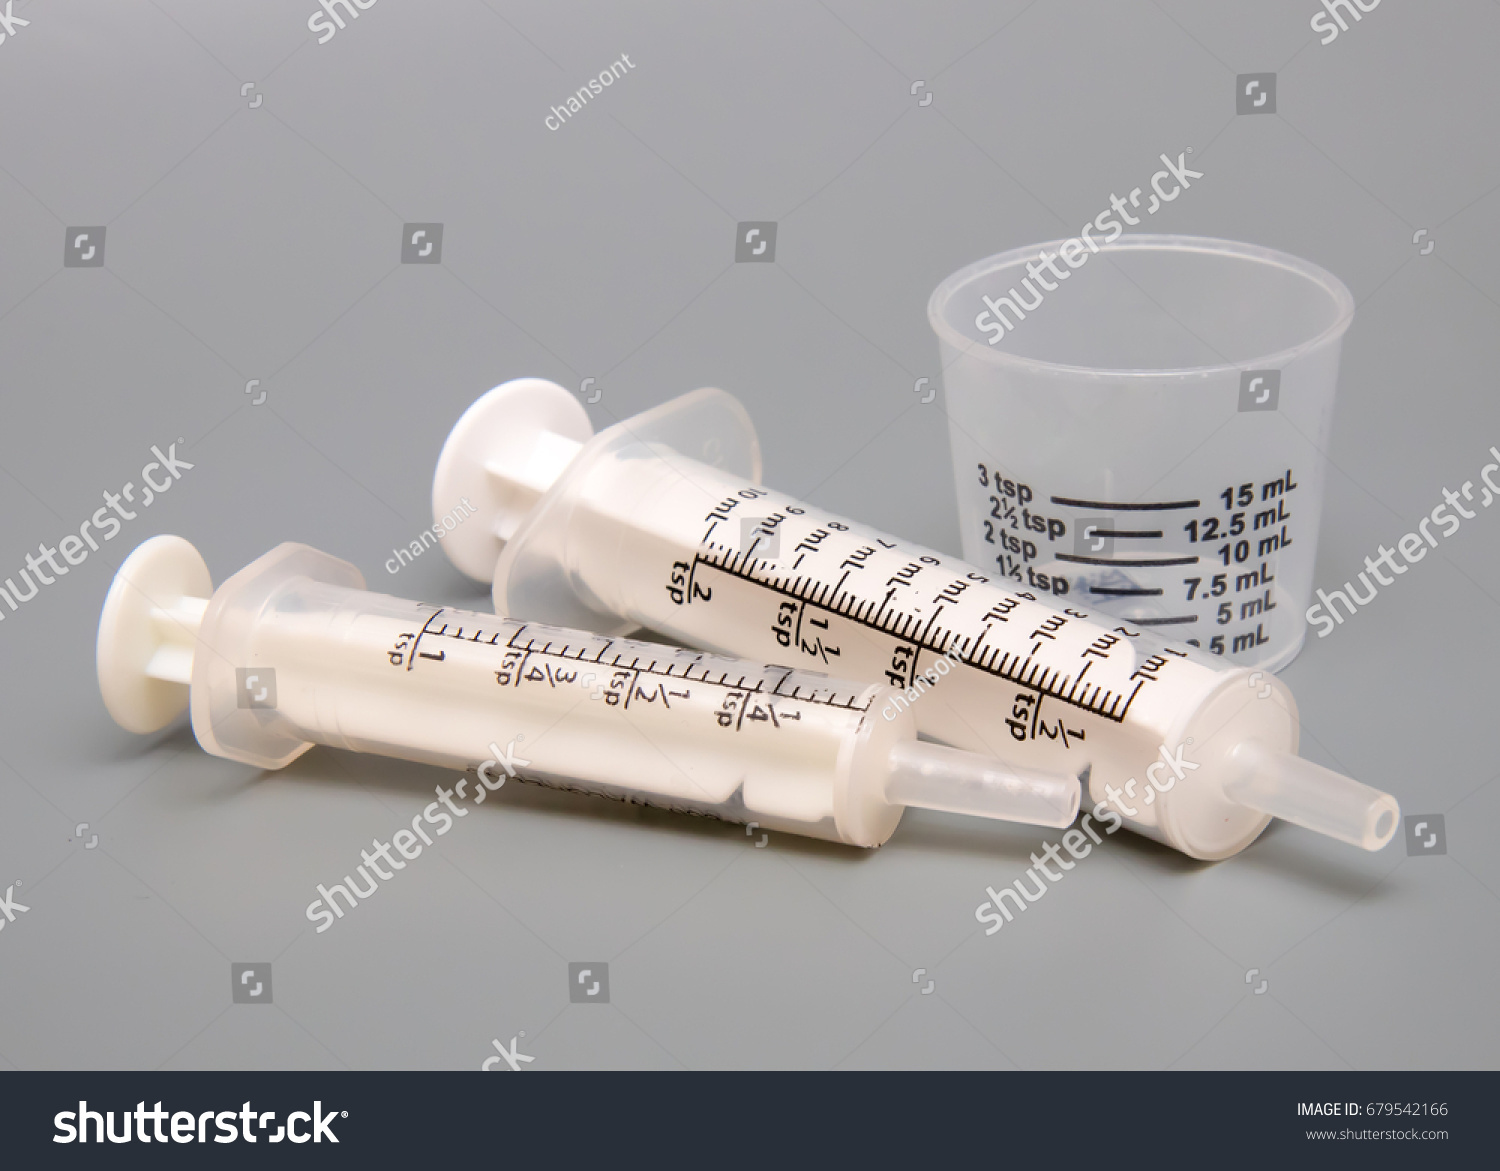 Oral medicine syringes and dosing cup #679542166